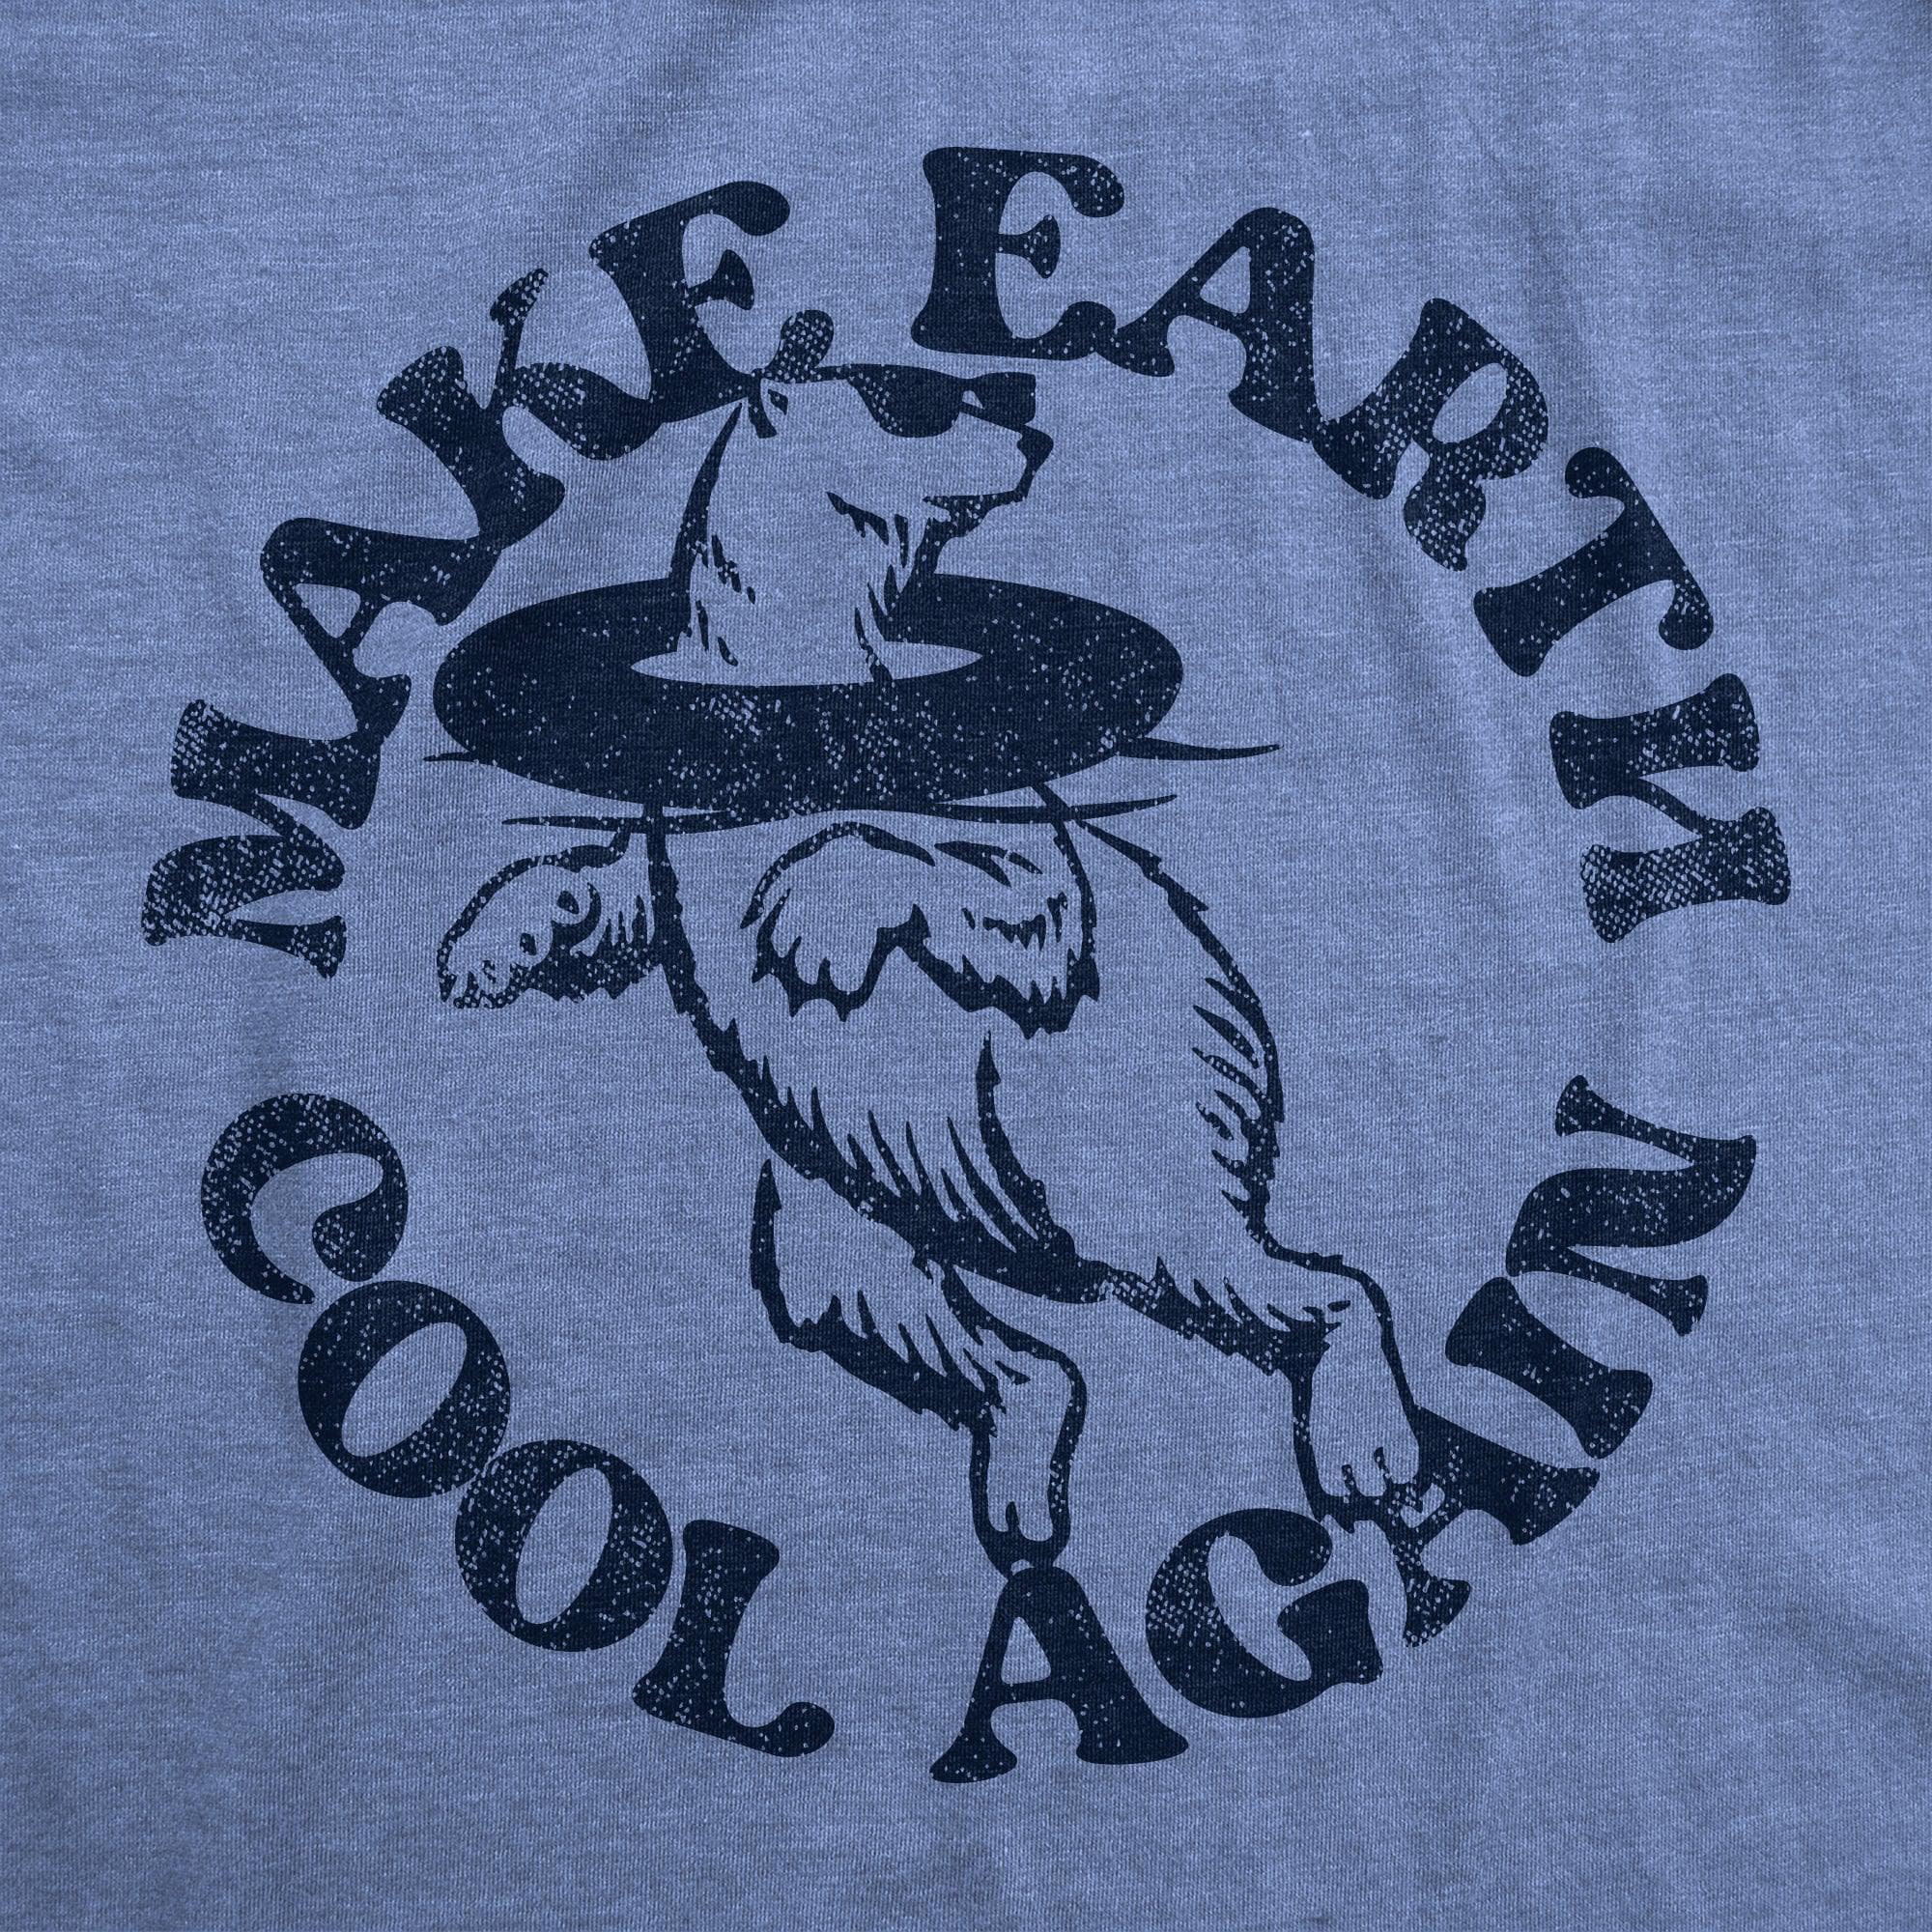 Make Earth Cool Again Men's Tshirt  -  Crazy Dog T-Shirts